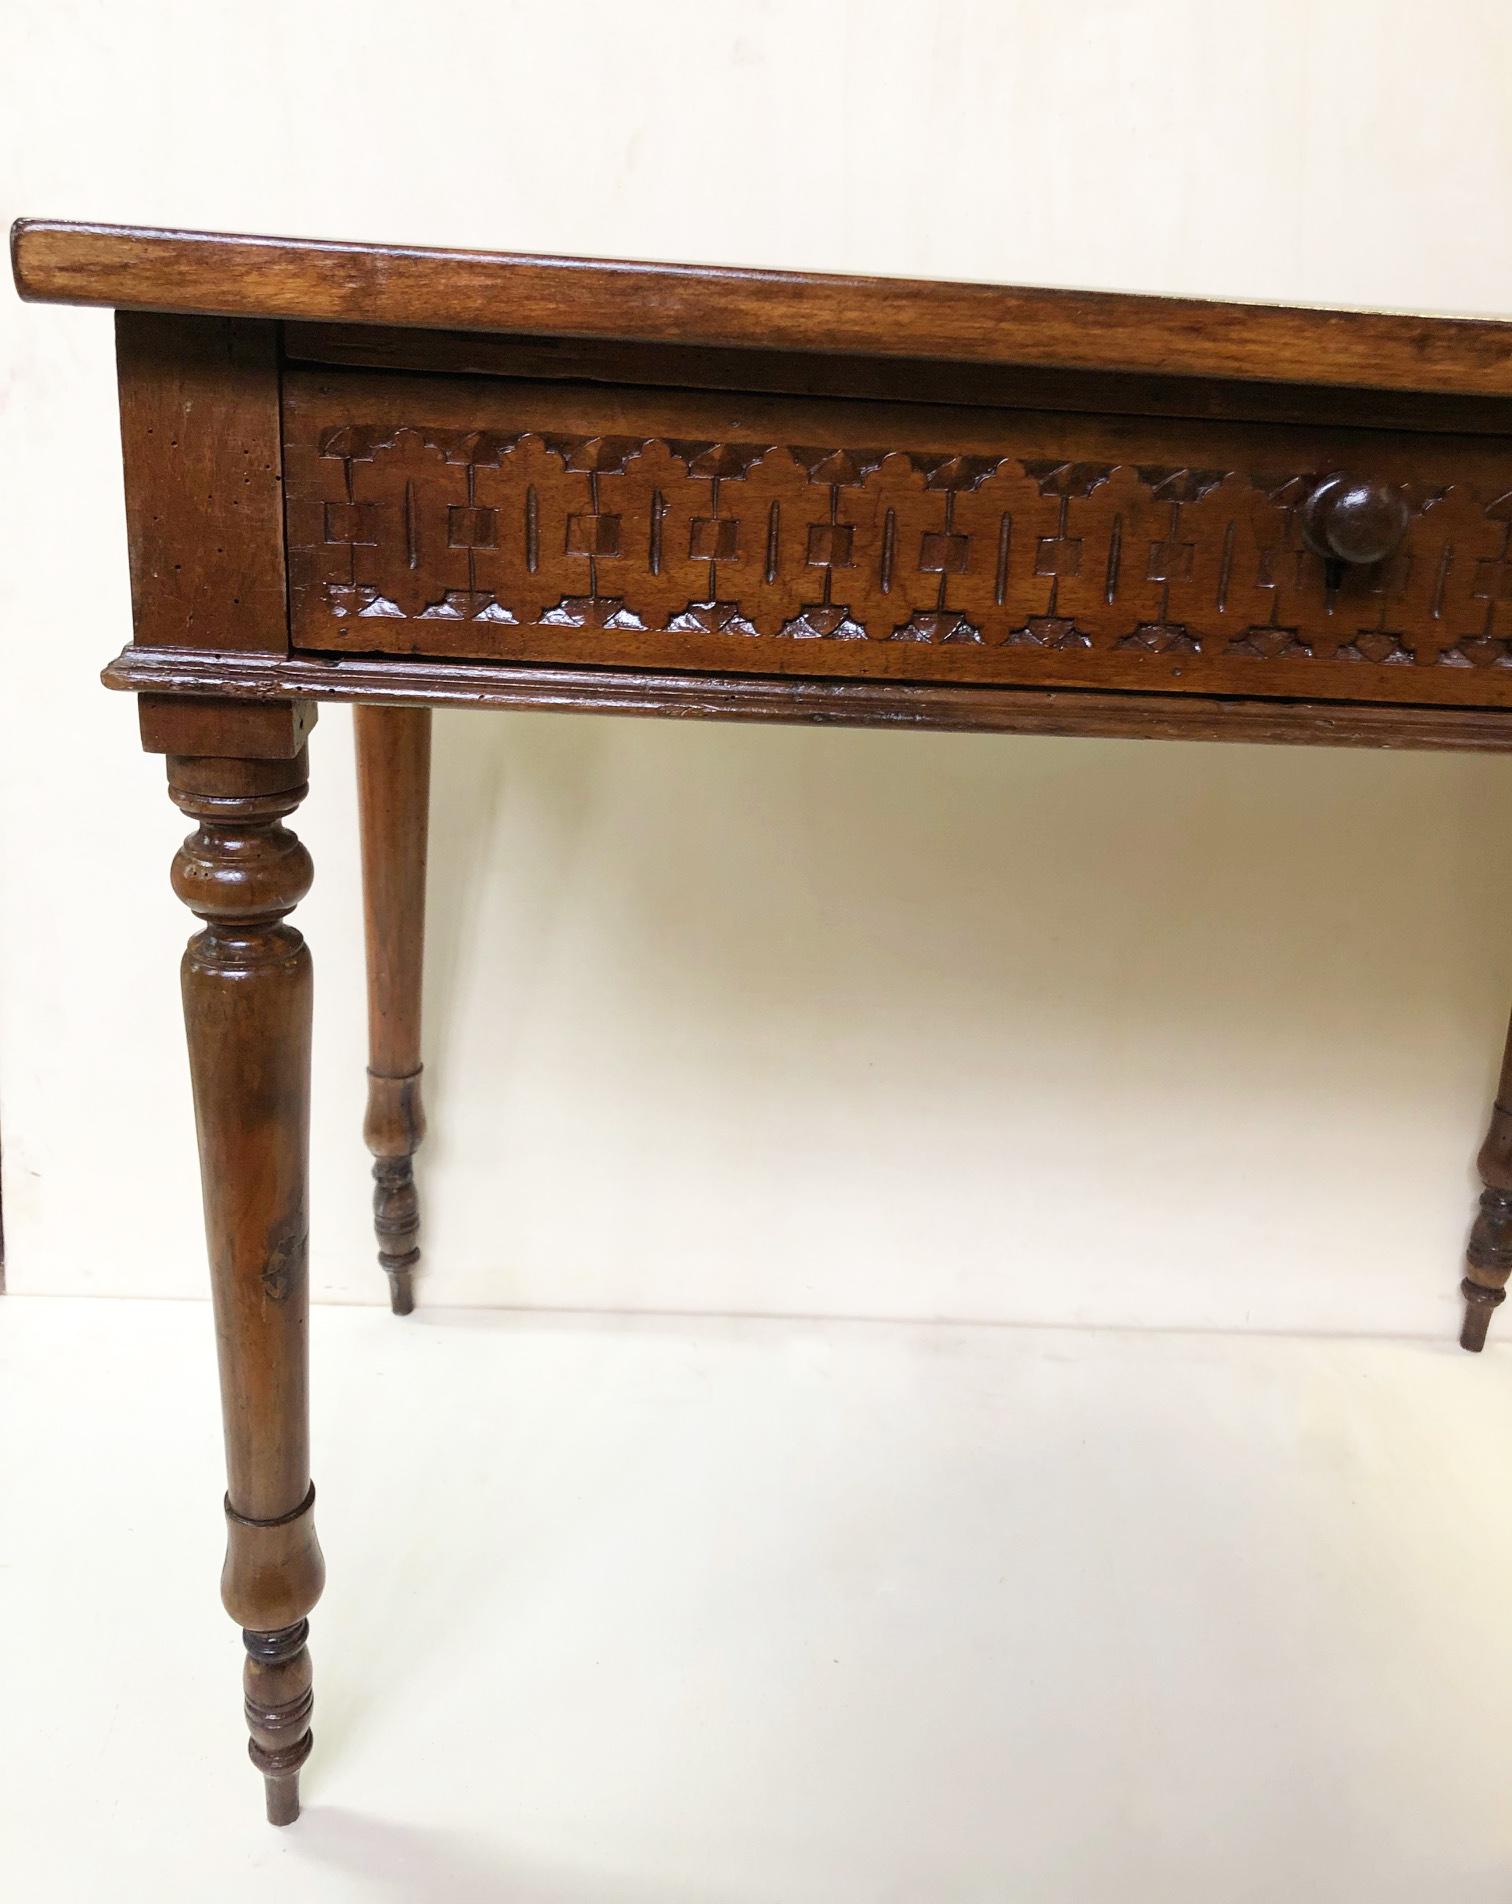 Poplar Original Italian Desk Table in Walnut with Perimeter Carvings from 1880